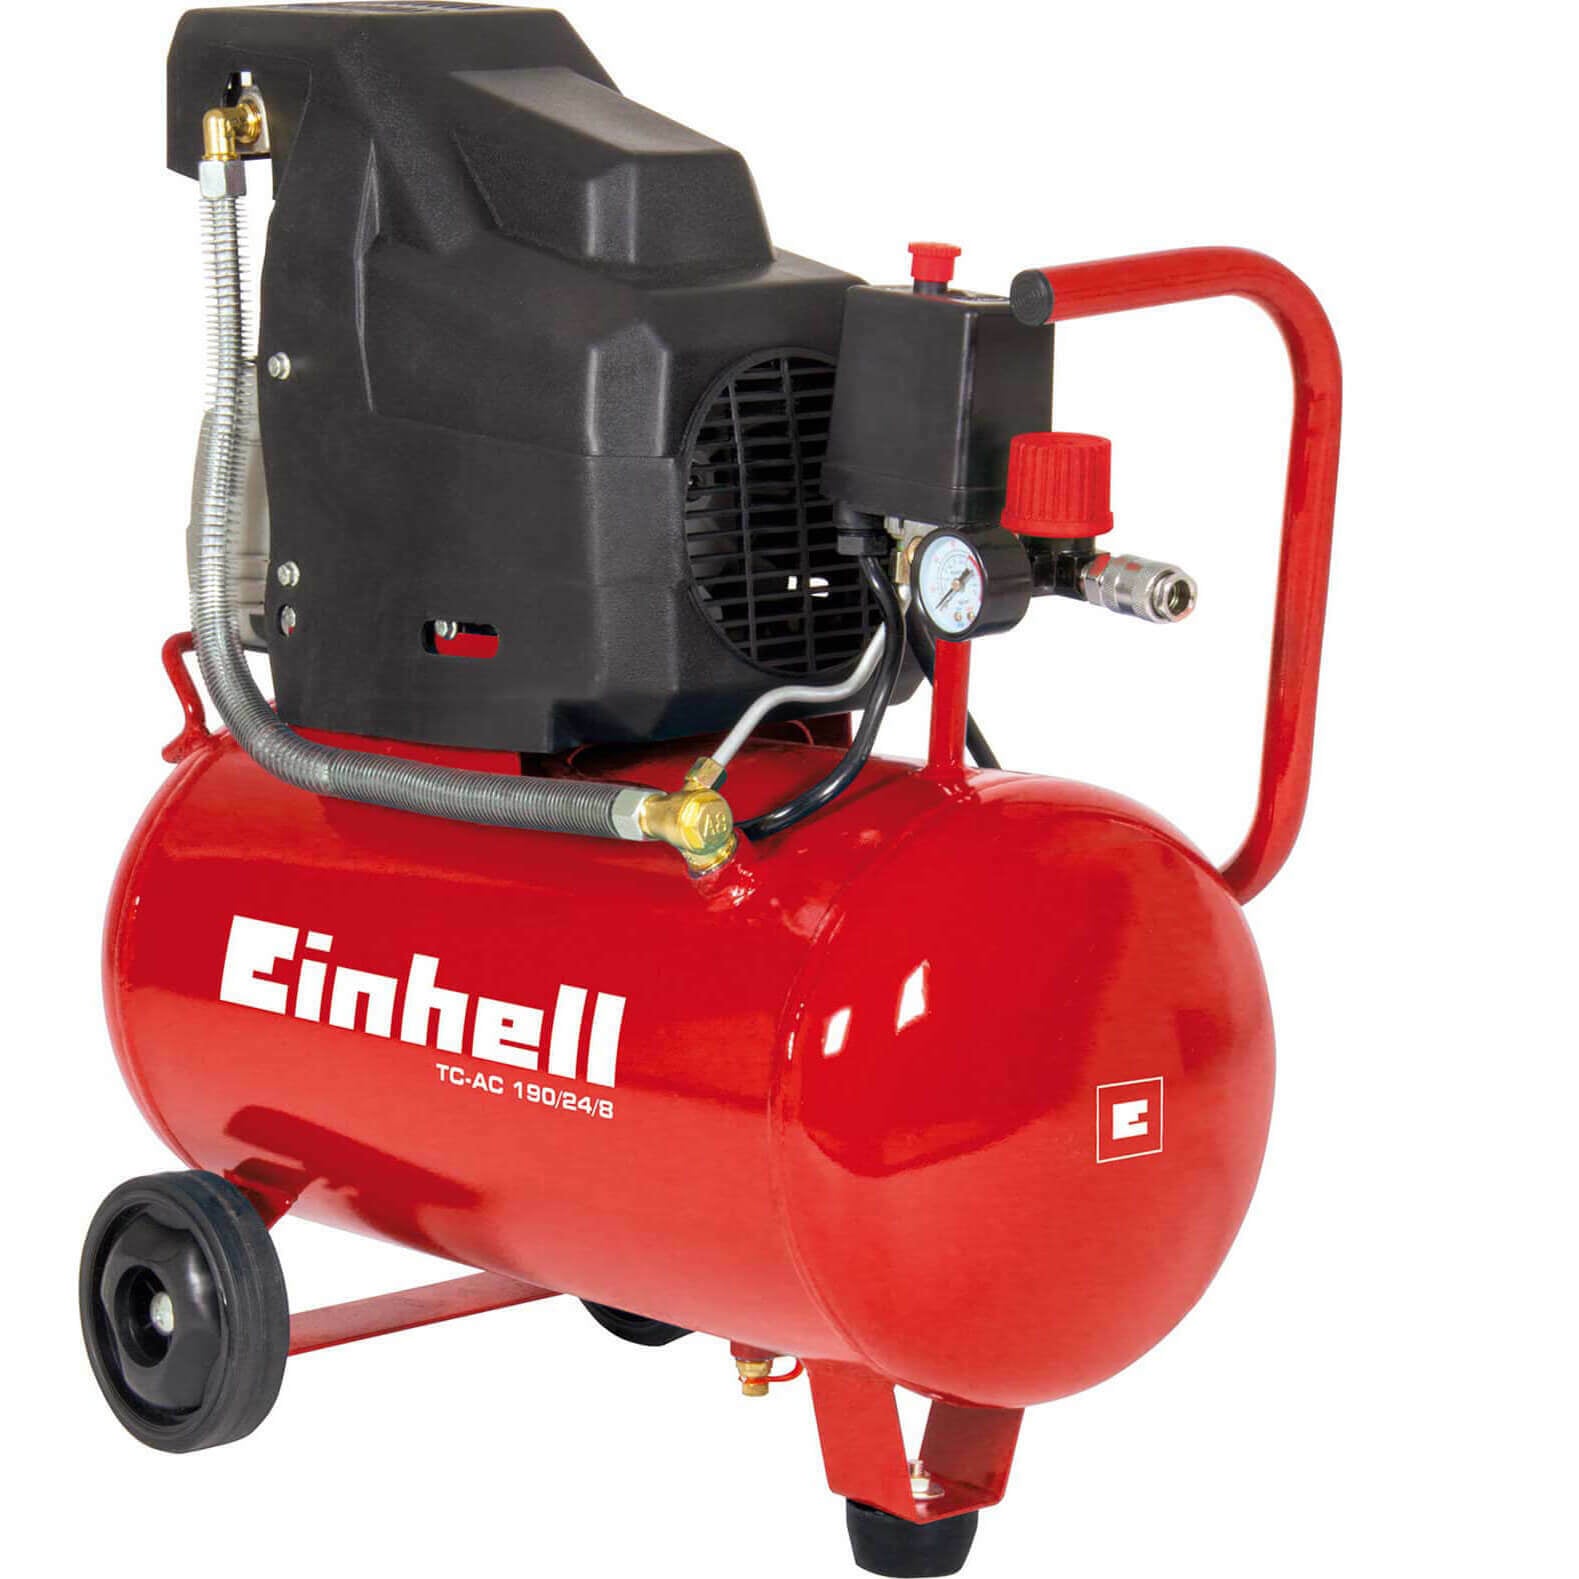 Einhell Air Compressor TC-AC 190/24/8 Power Tool Services